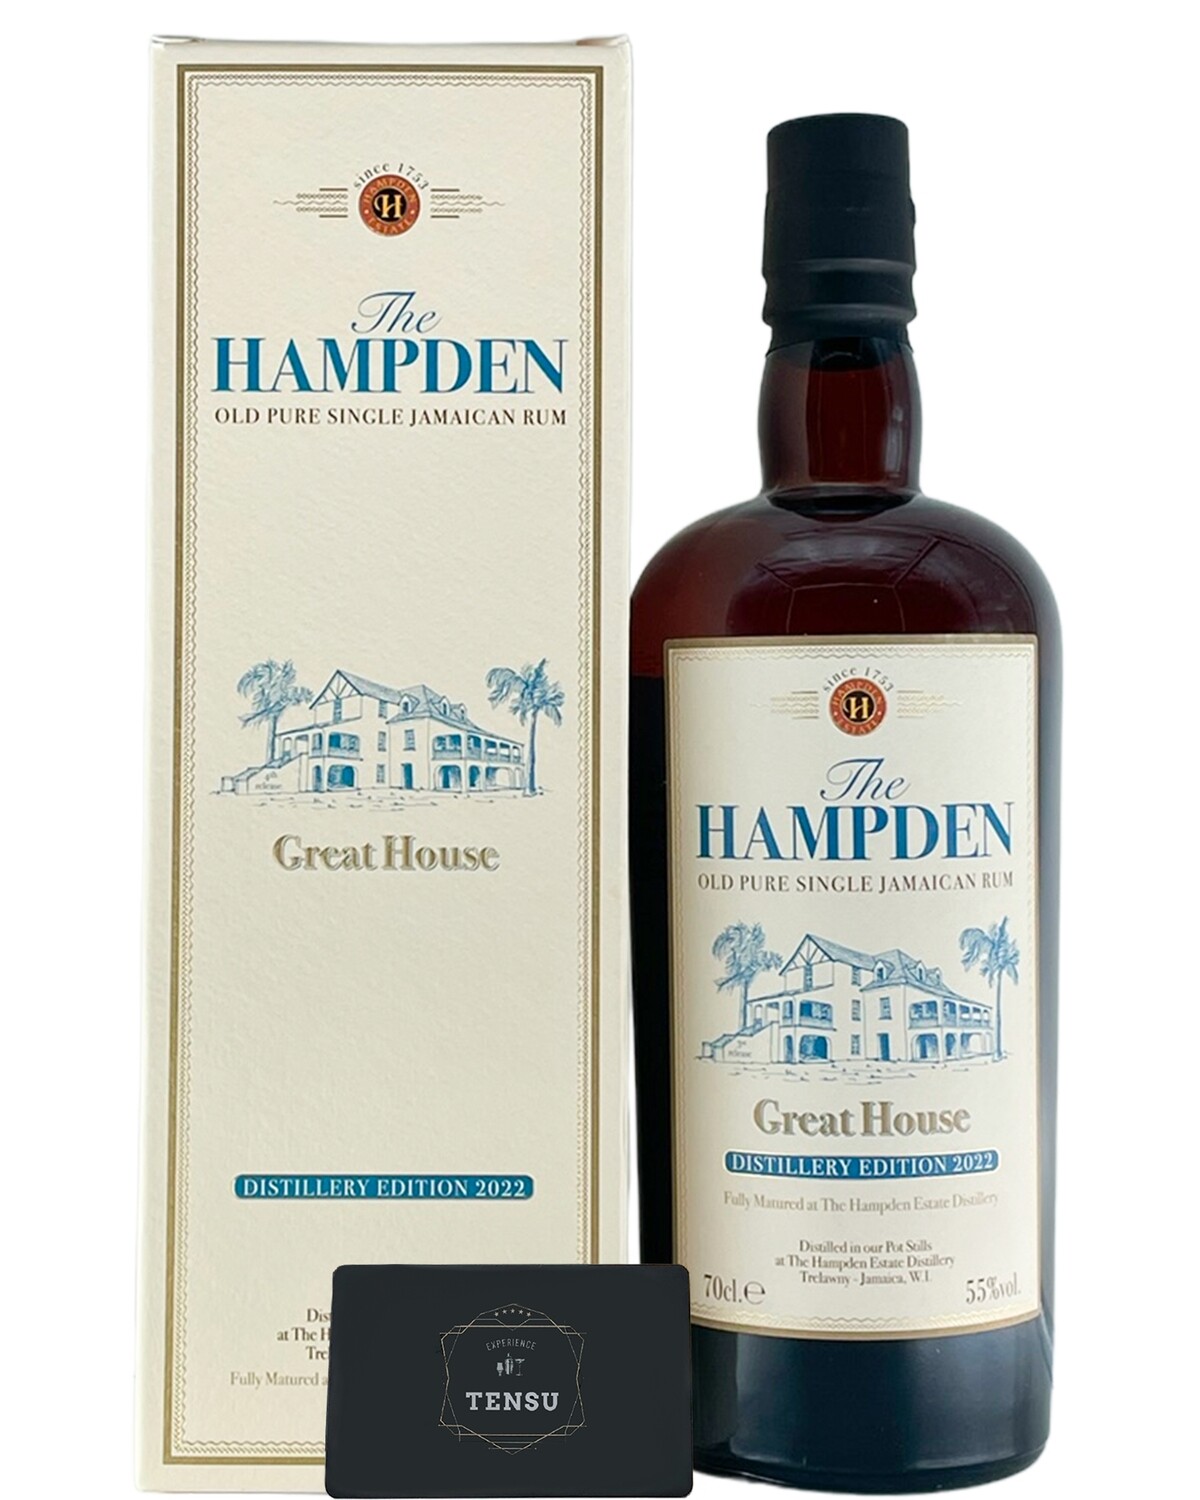 Hampden Great House - Distillery Edition (2022) 55.0 "OB"